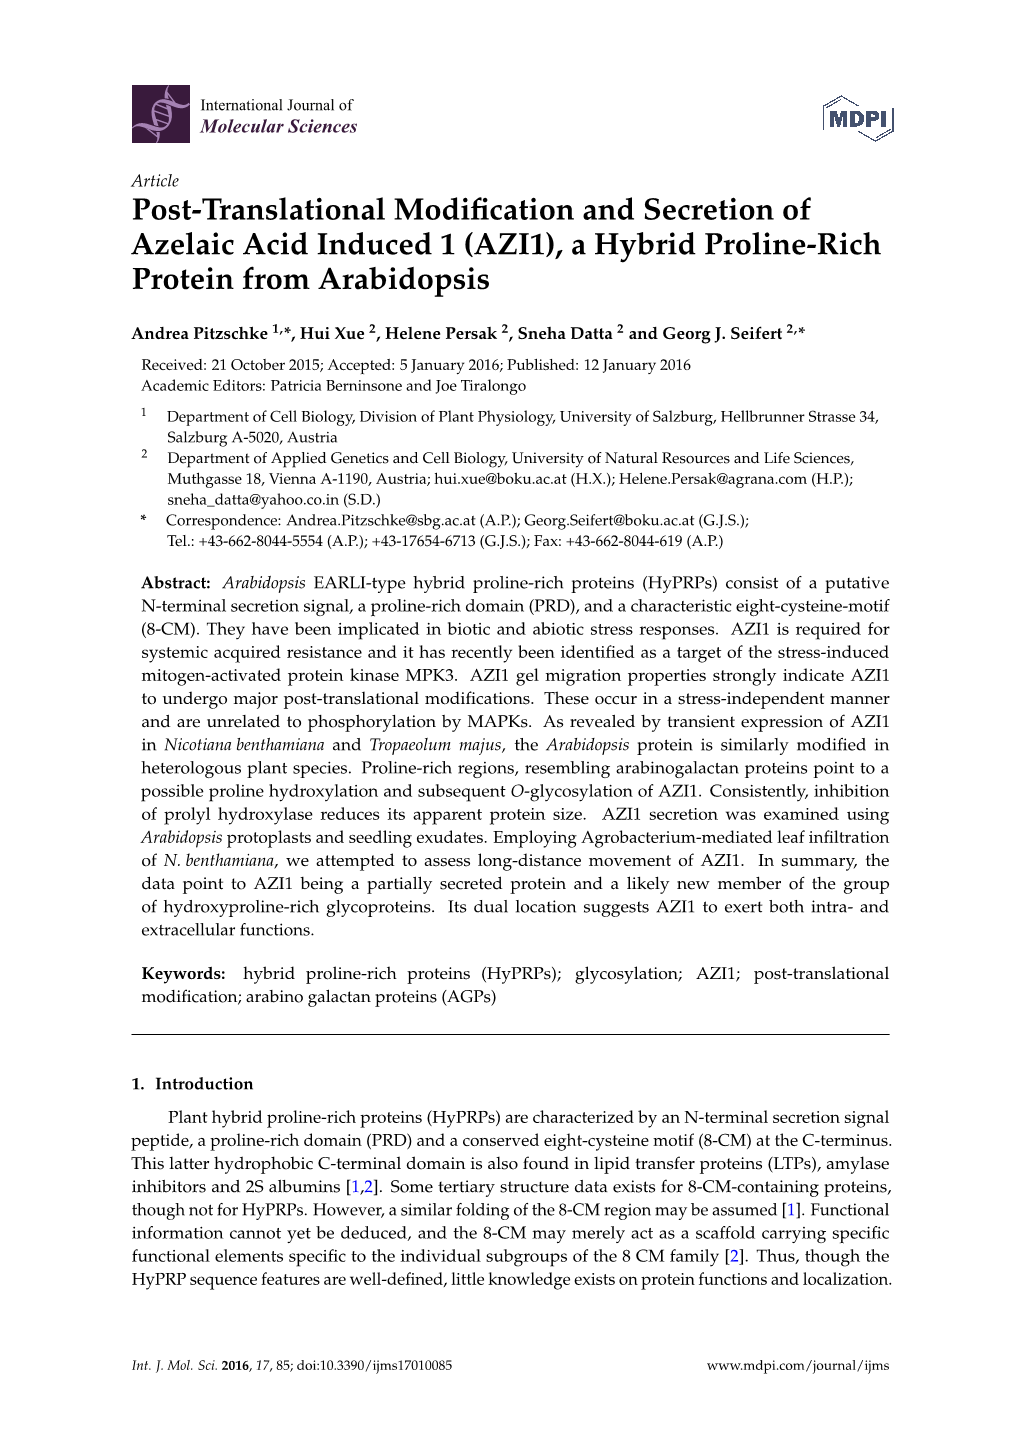 Post-Translational Modification and Secretion of Azelaic Acid Induced 1